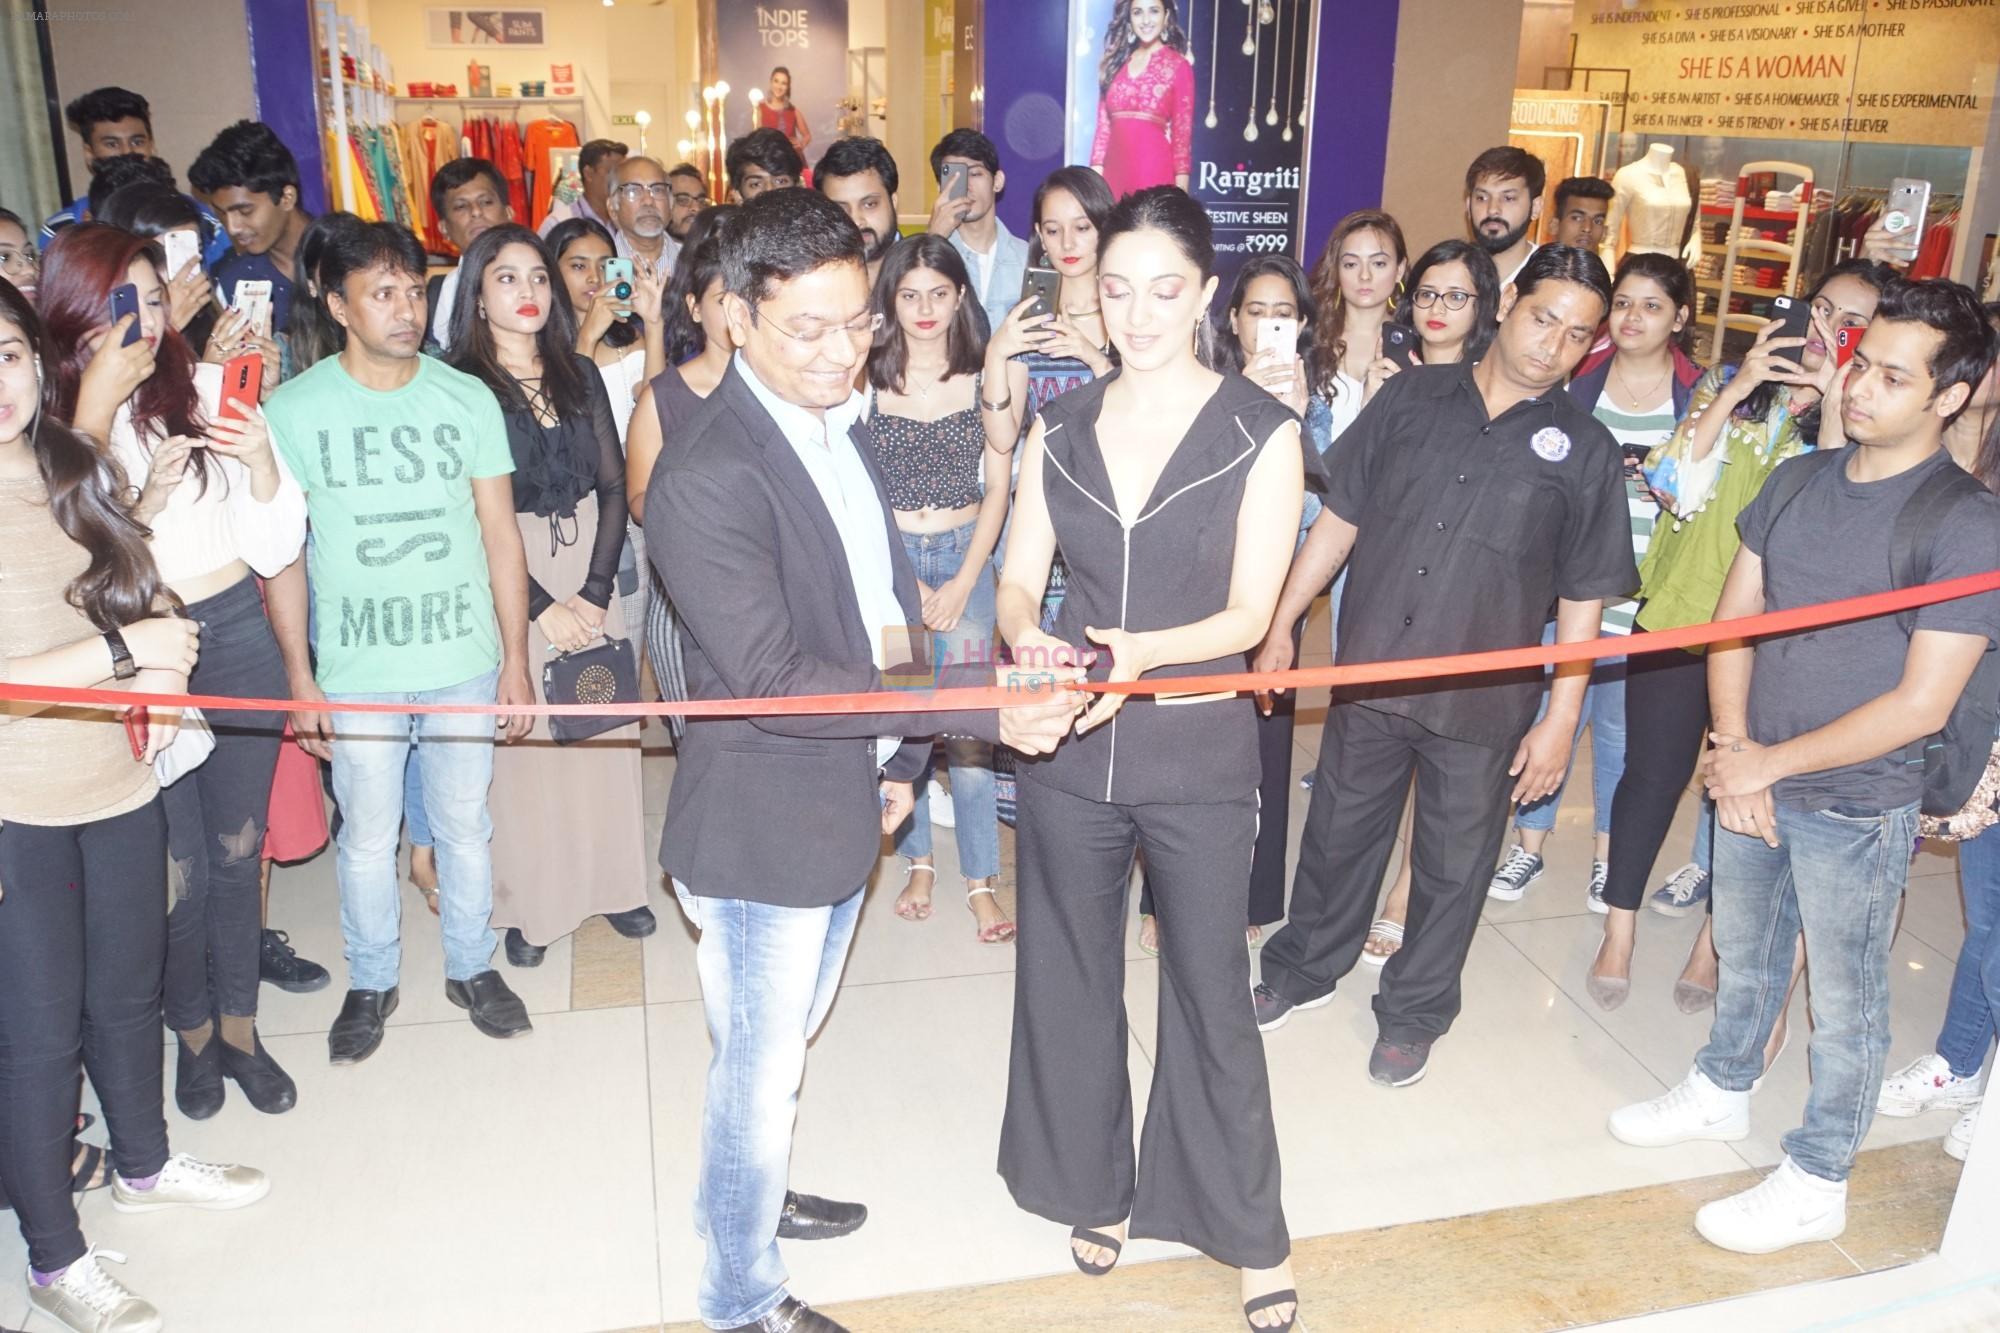 Kiara Advani at the Store Launch Of Bluestone on 10th Dec 2018